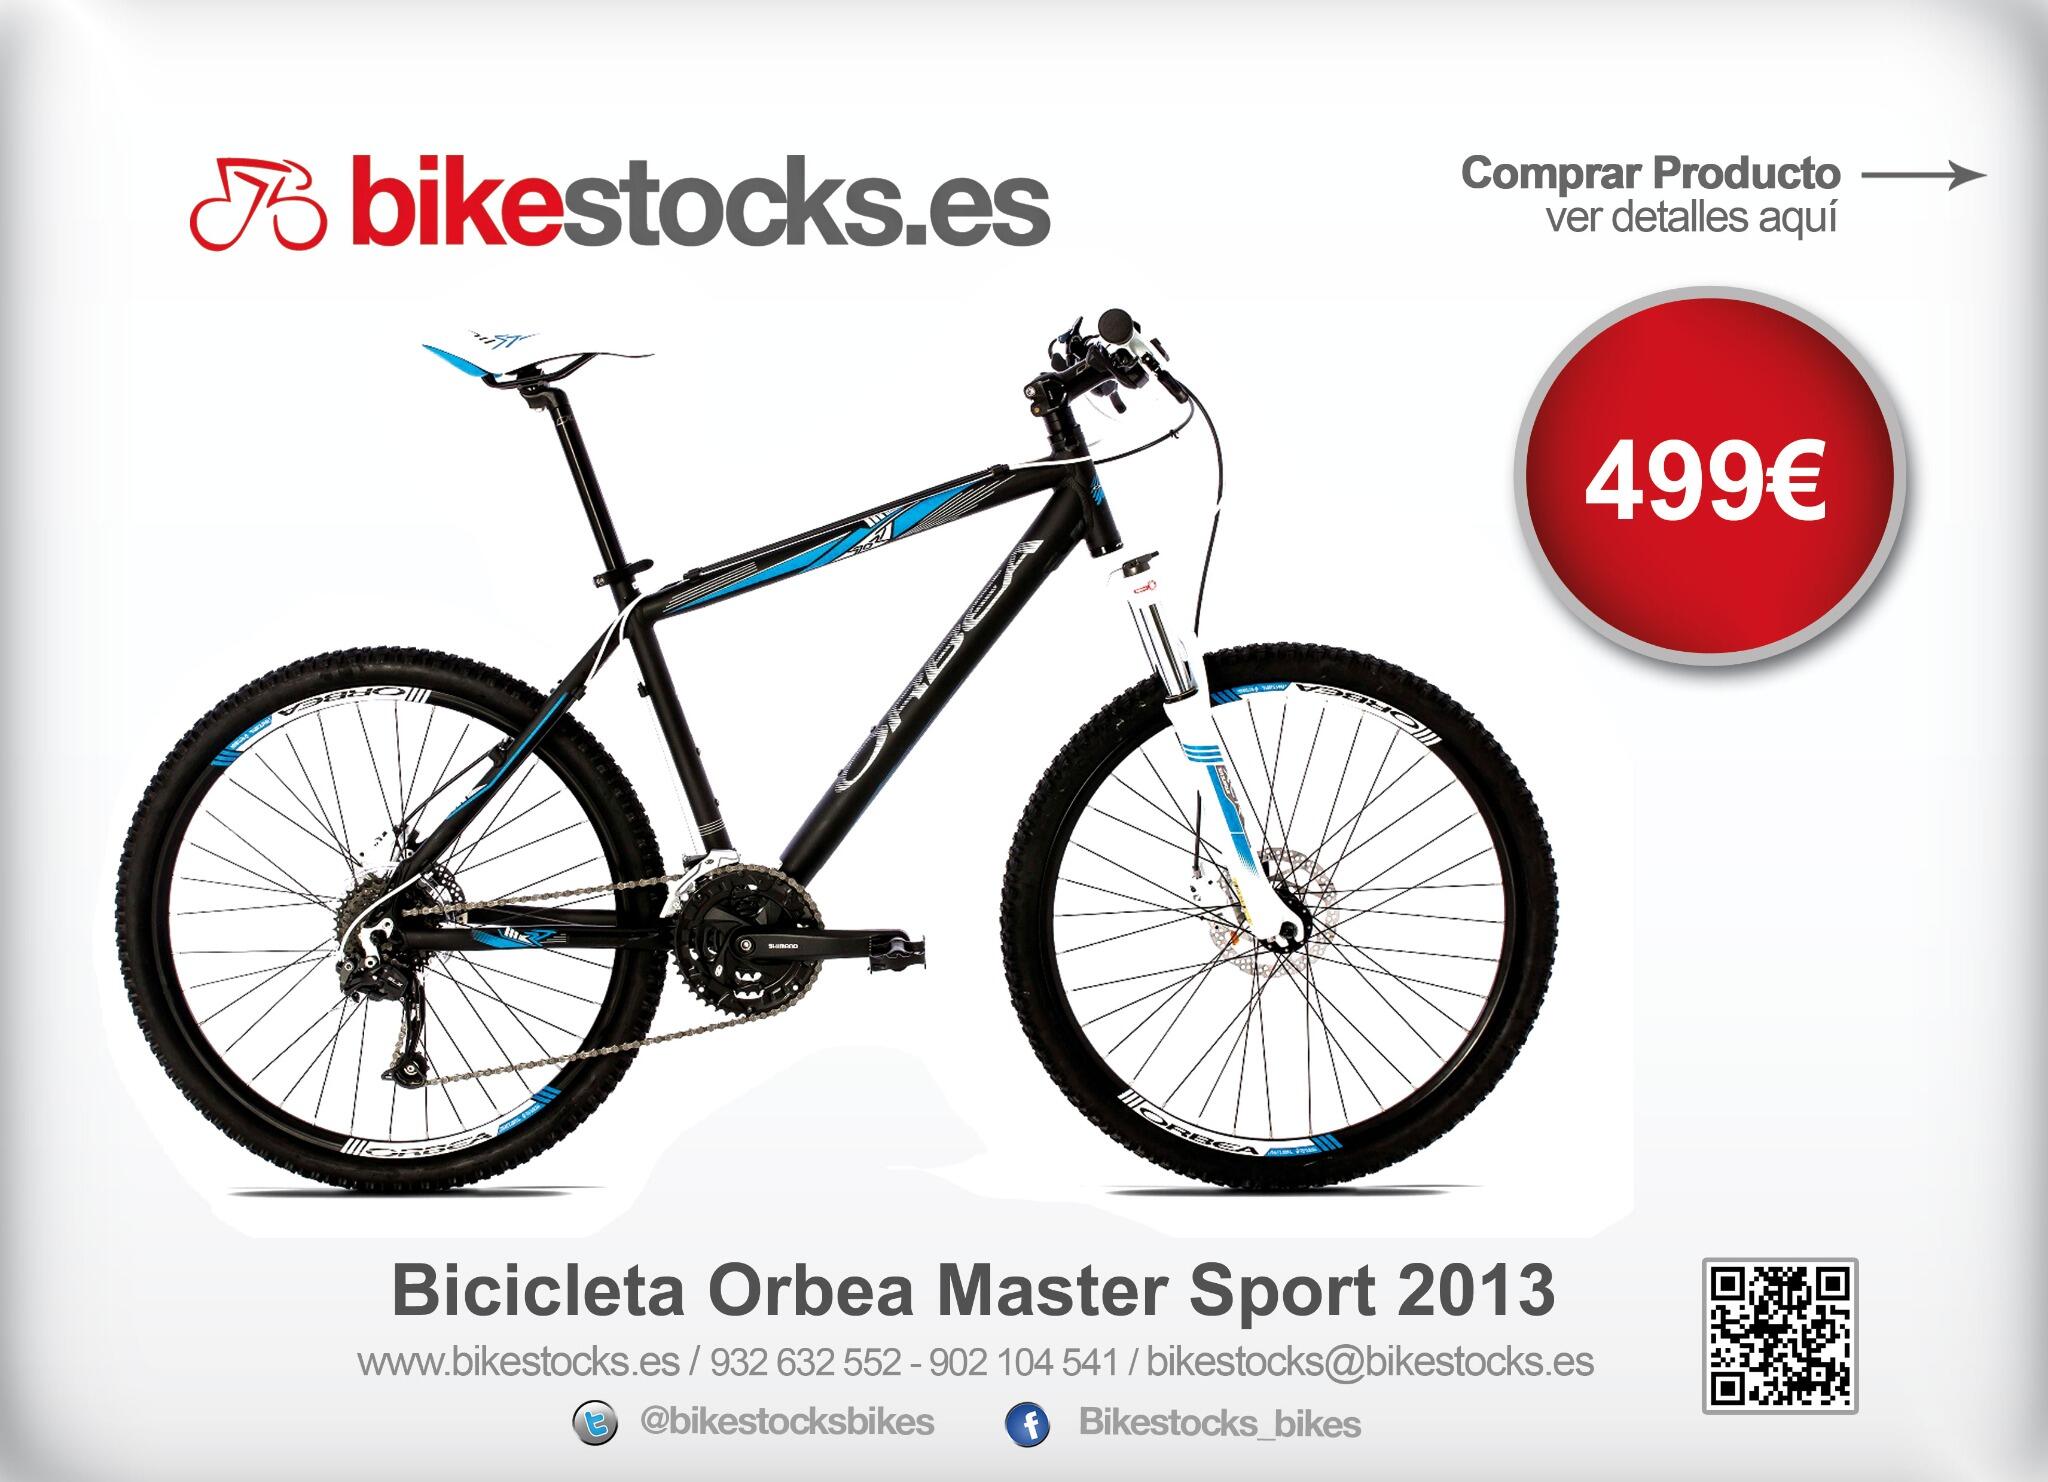 Disparidad Alerta a nombre de bikestocks on Twitter: "Bicicleta Orbea Master Sport 2013 - Ver más  detalles aquí:http://t.co/3S3VRiTGSe #ciclismo #bicicletas  http://t.co/1lbGsPmkP5" / Twitter